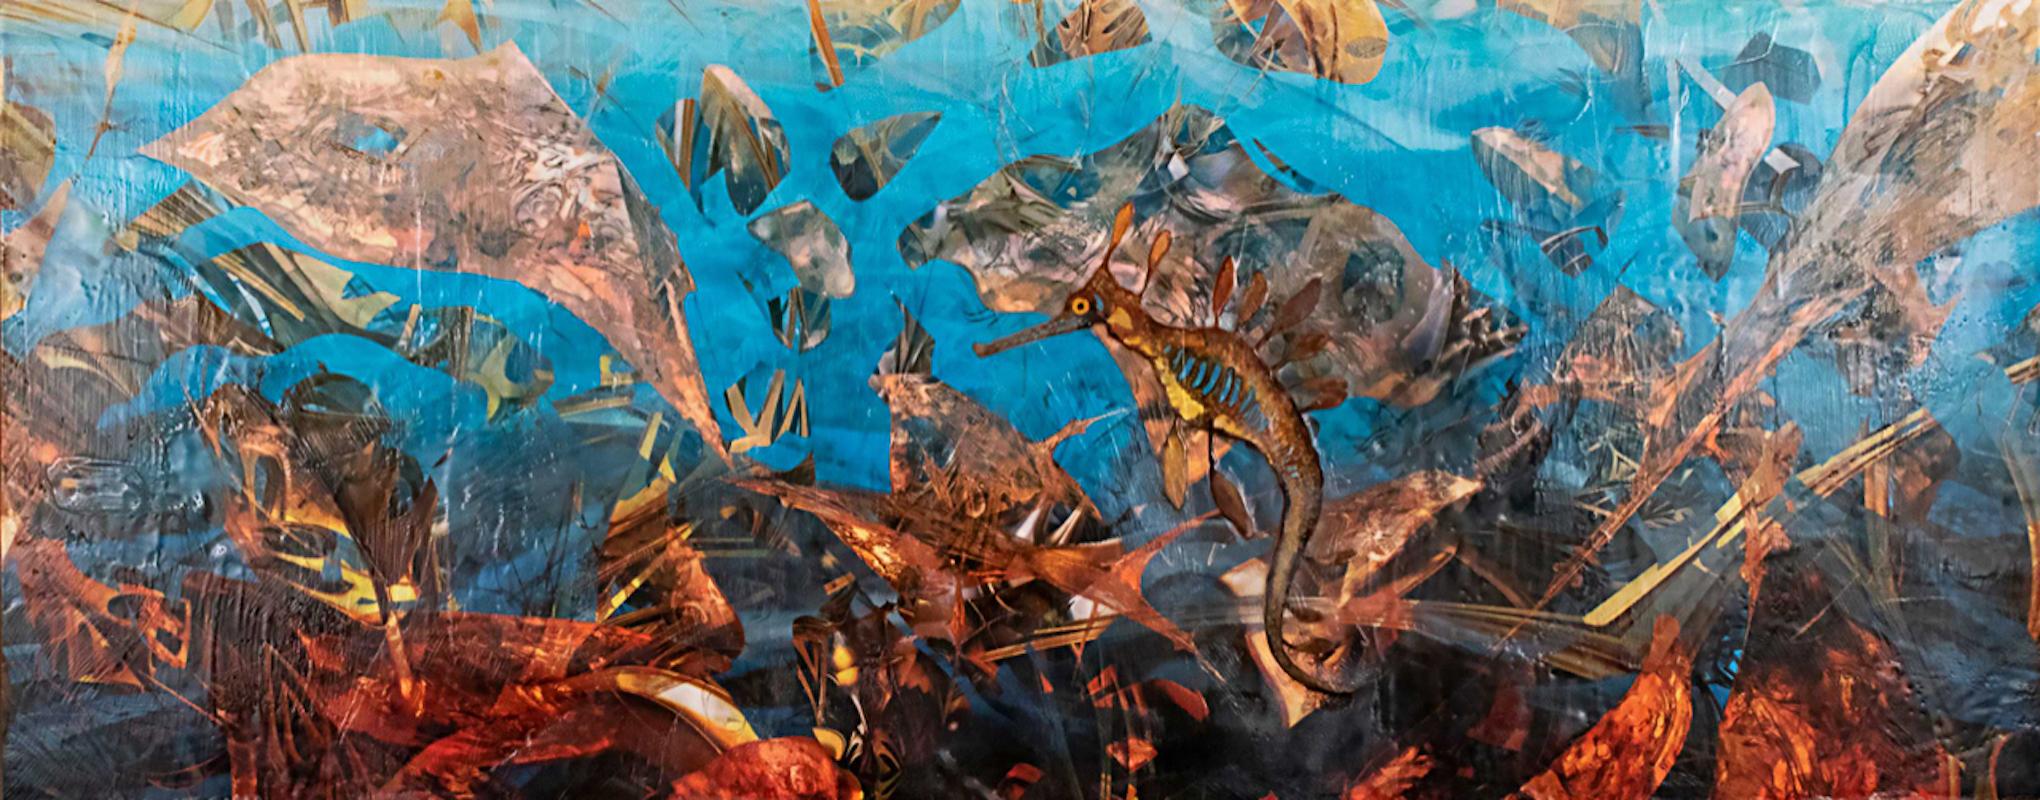 Seahorse Reef - Mixed Media Art by Teri Brudnak